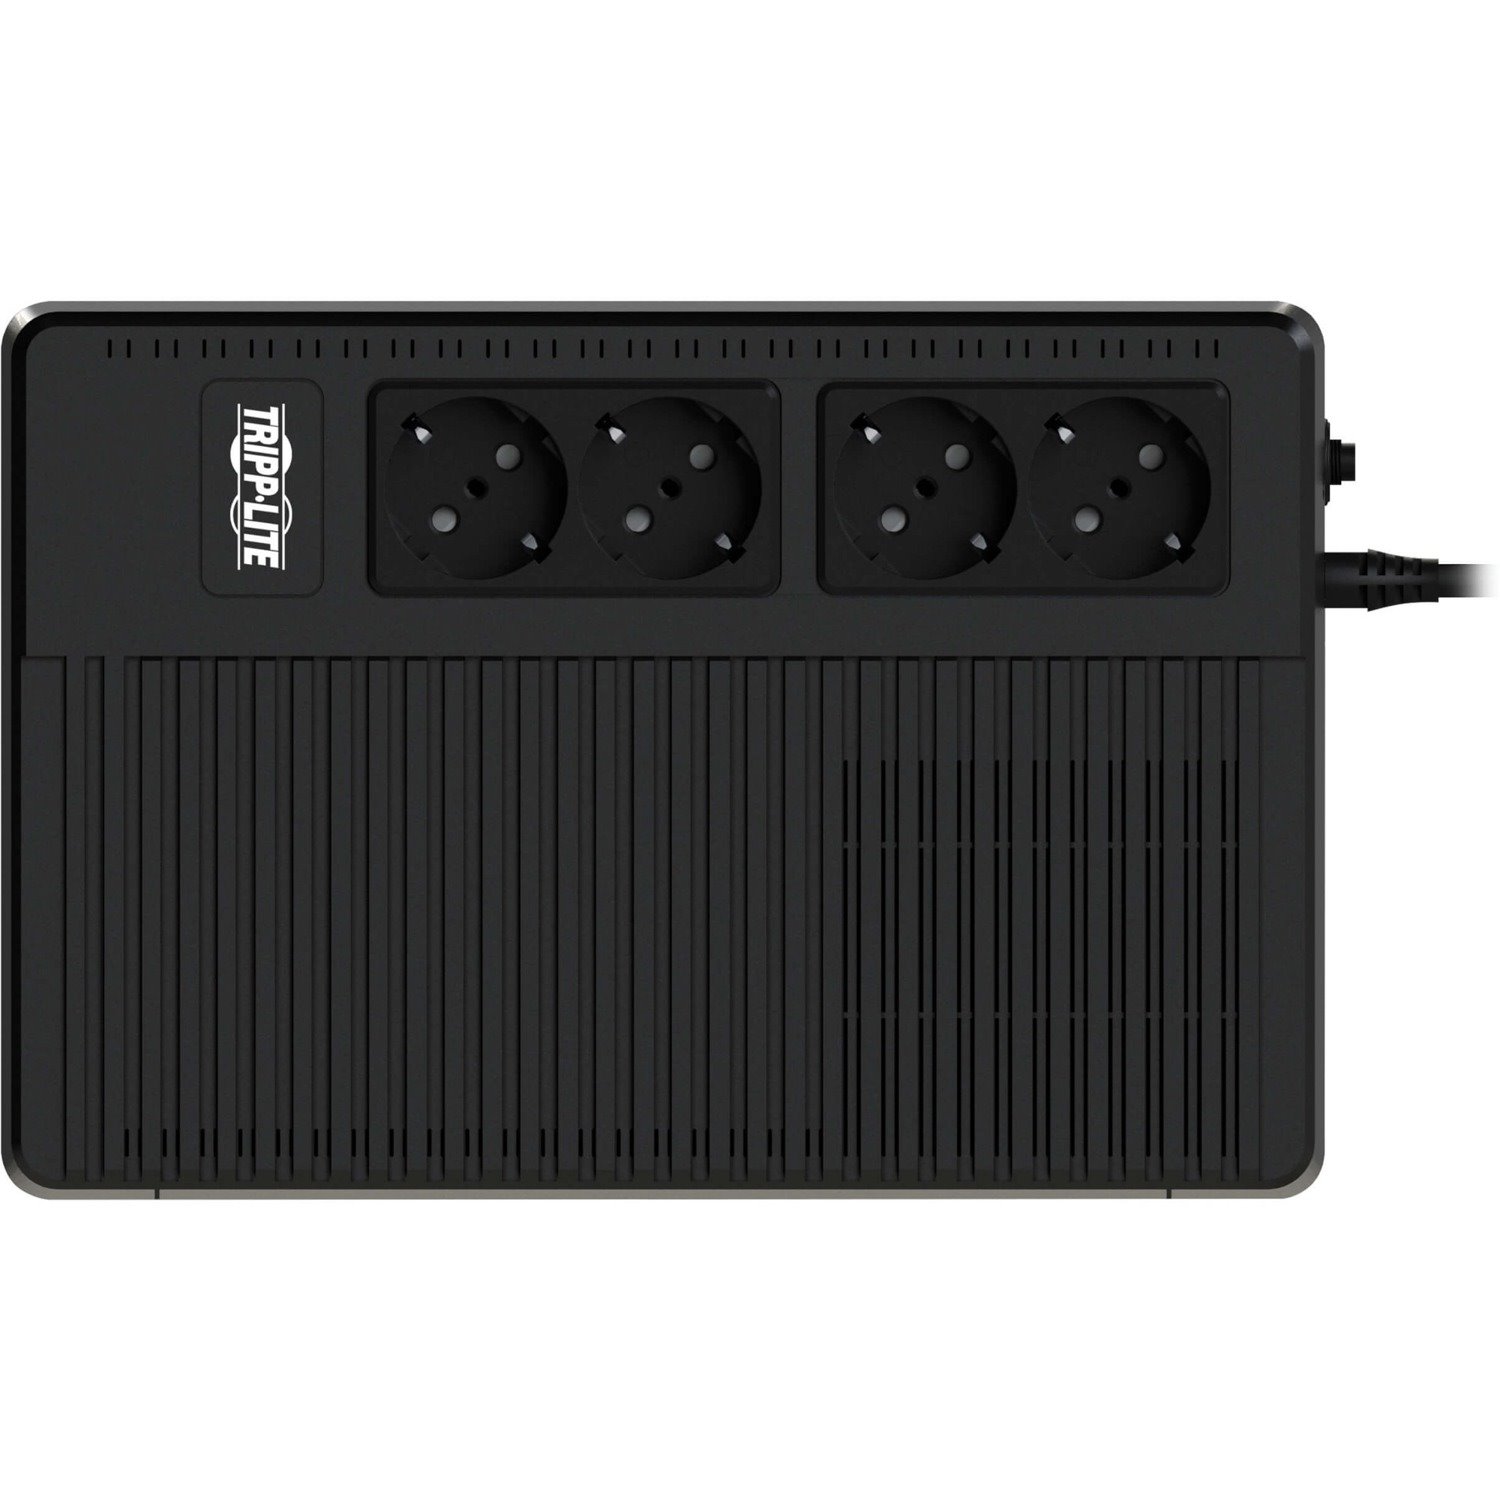 Tripp Lite by Eaton 230V 800VA 450W Ultra-Compact Line-Interactive UPS - 4 Schuko Outlets, Desktop/Wall-Mount